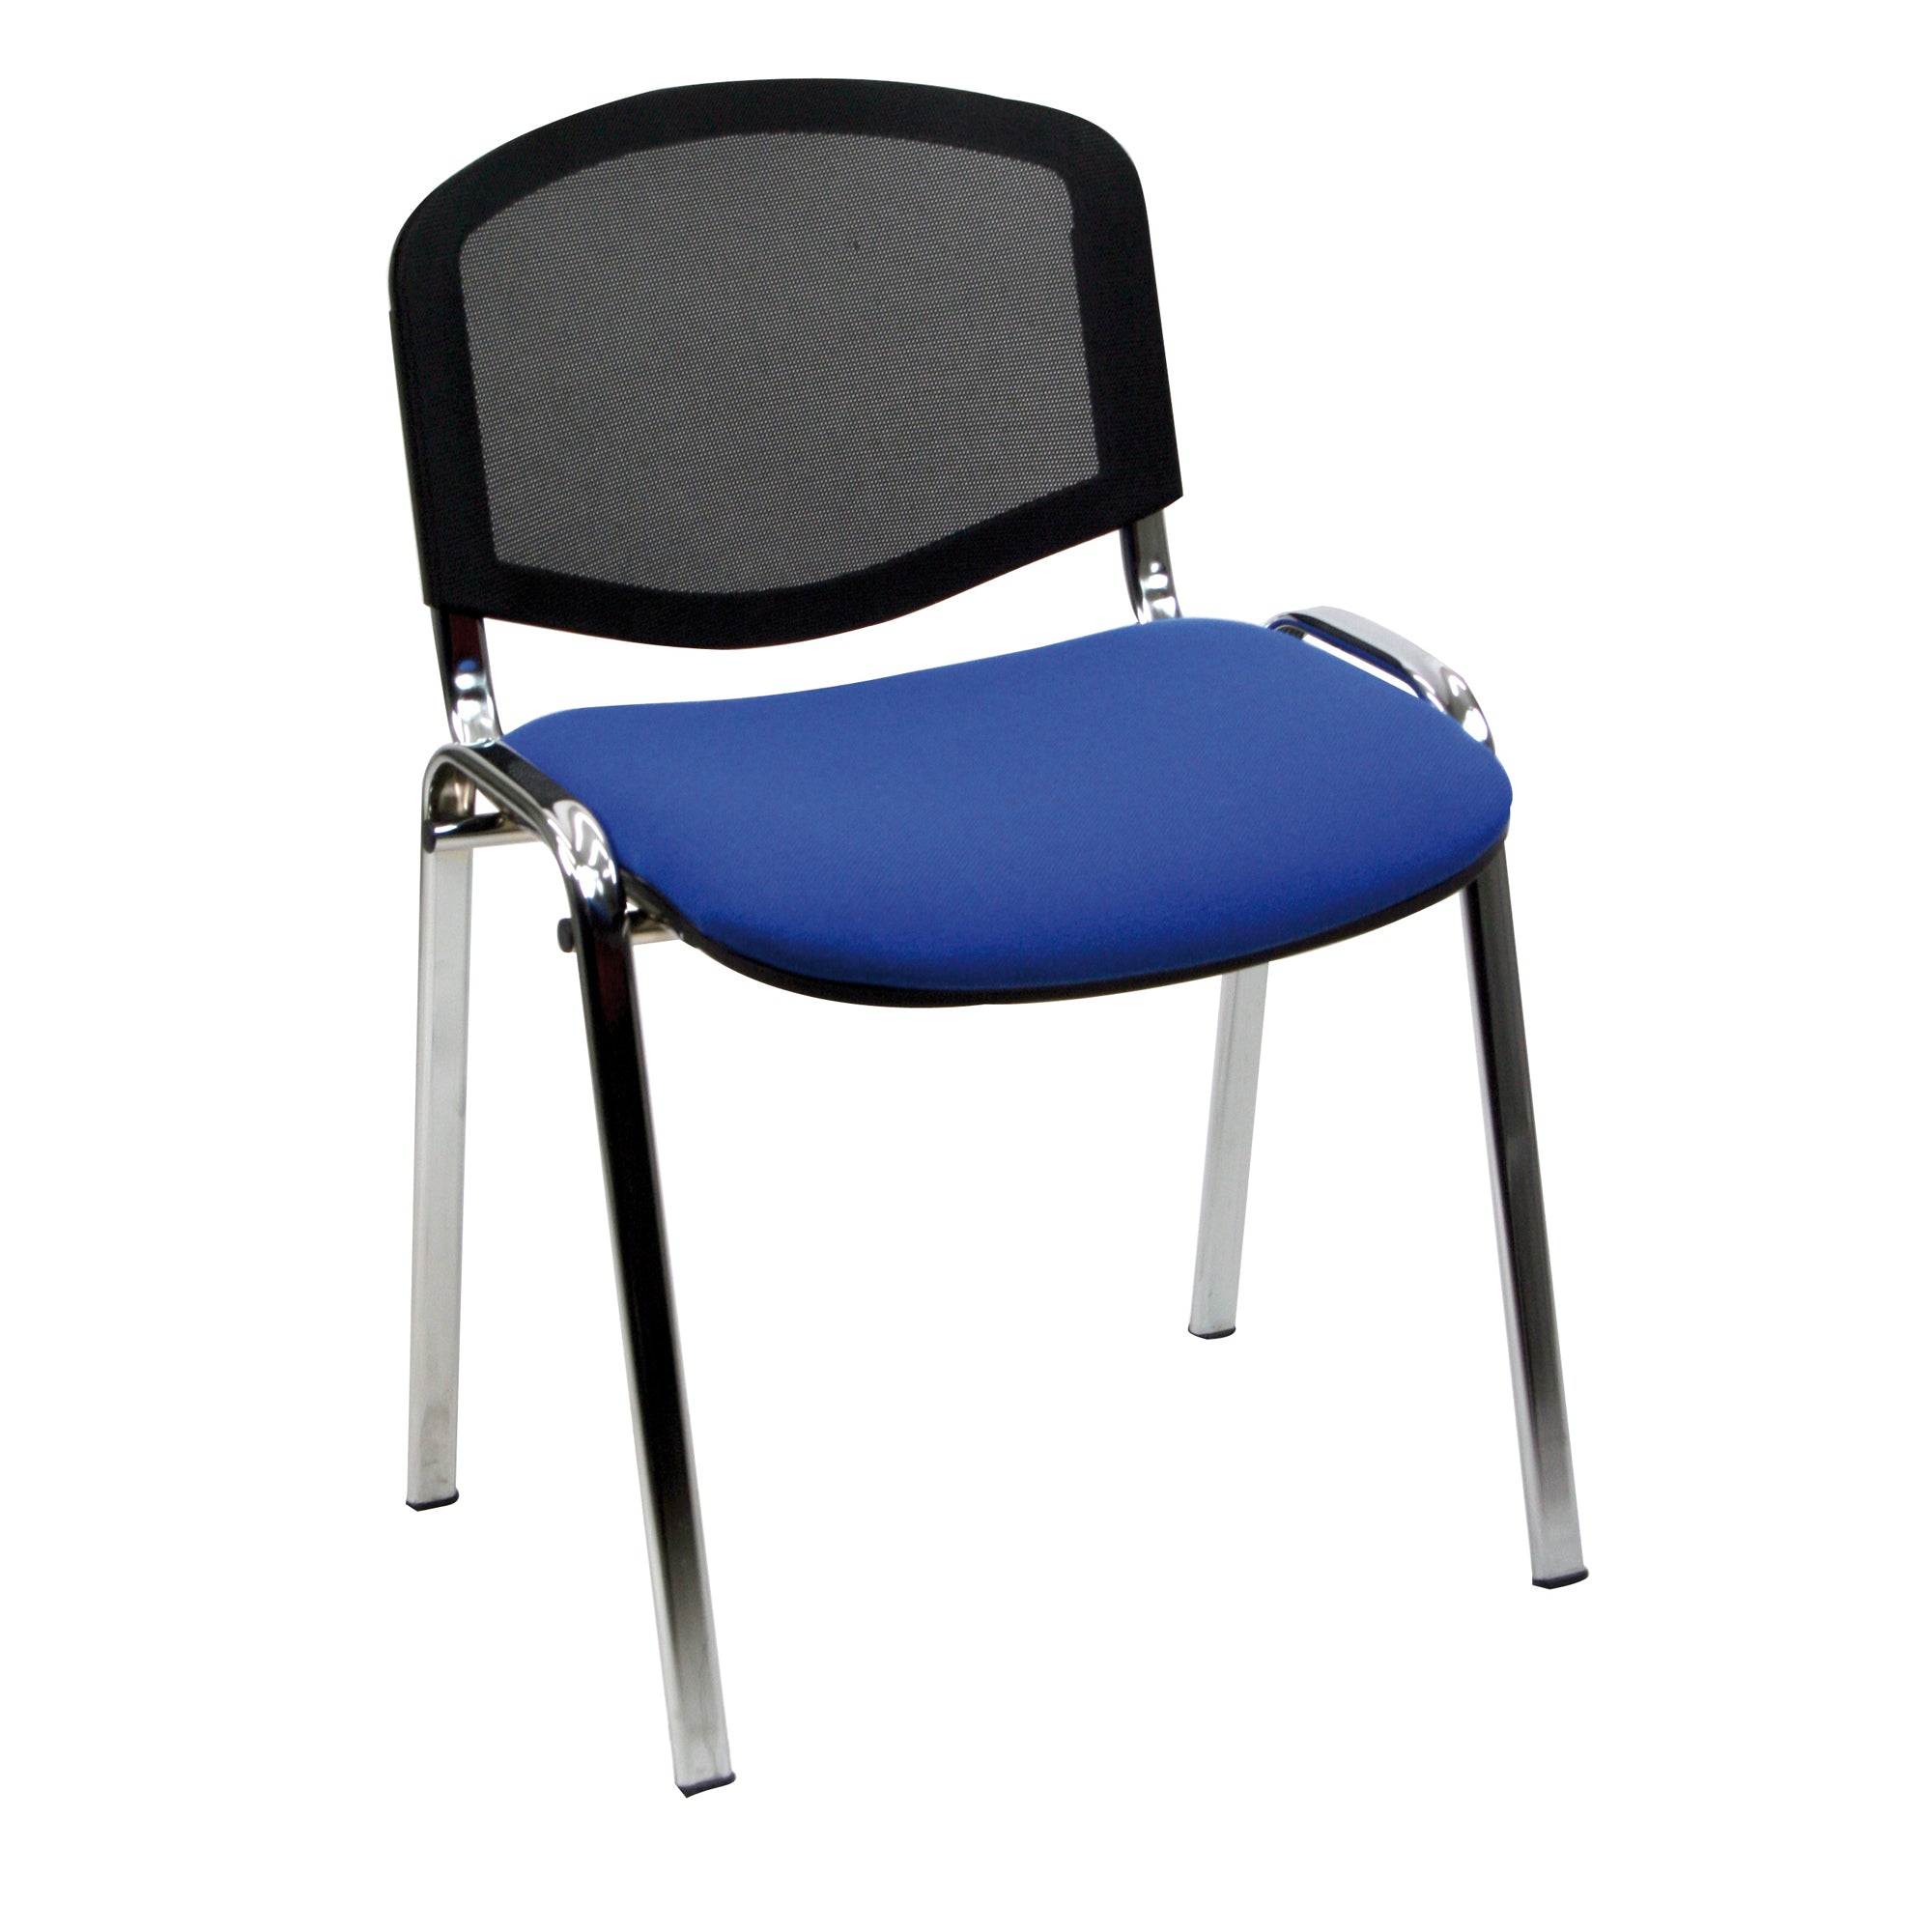 unisit-sedia-attesa-dado-d5cn-blu-senza-braccioli